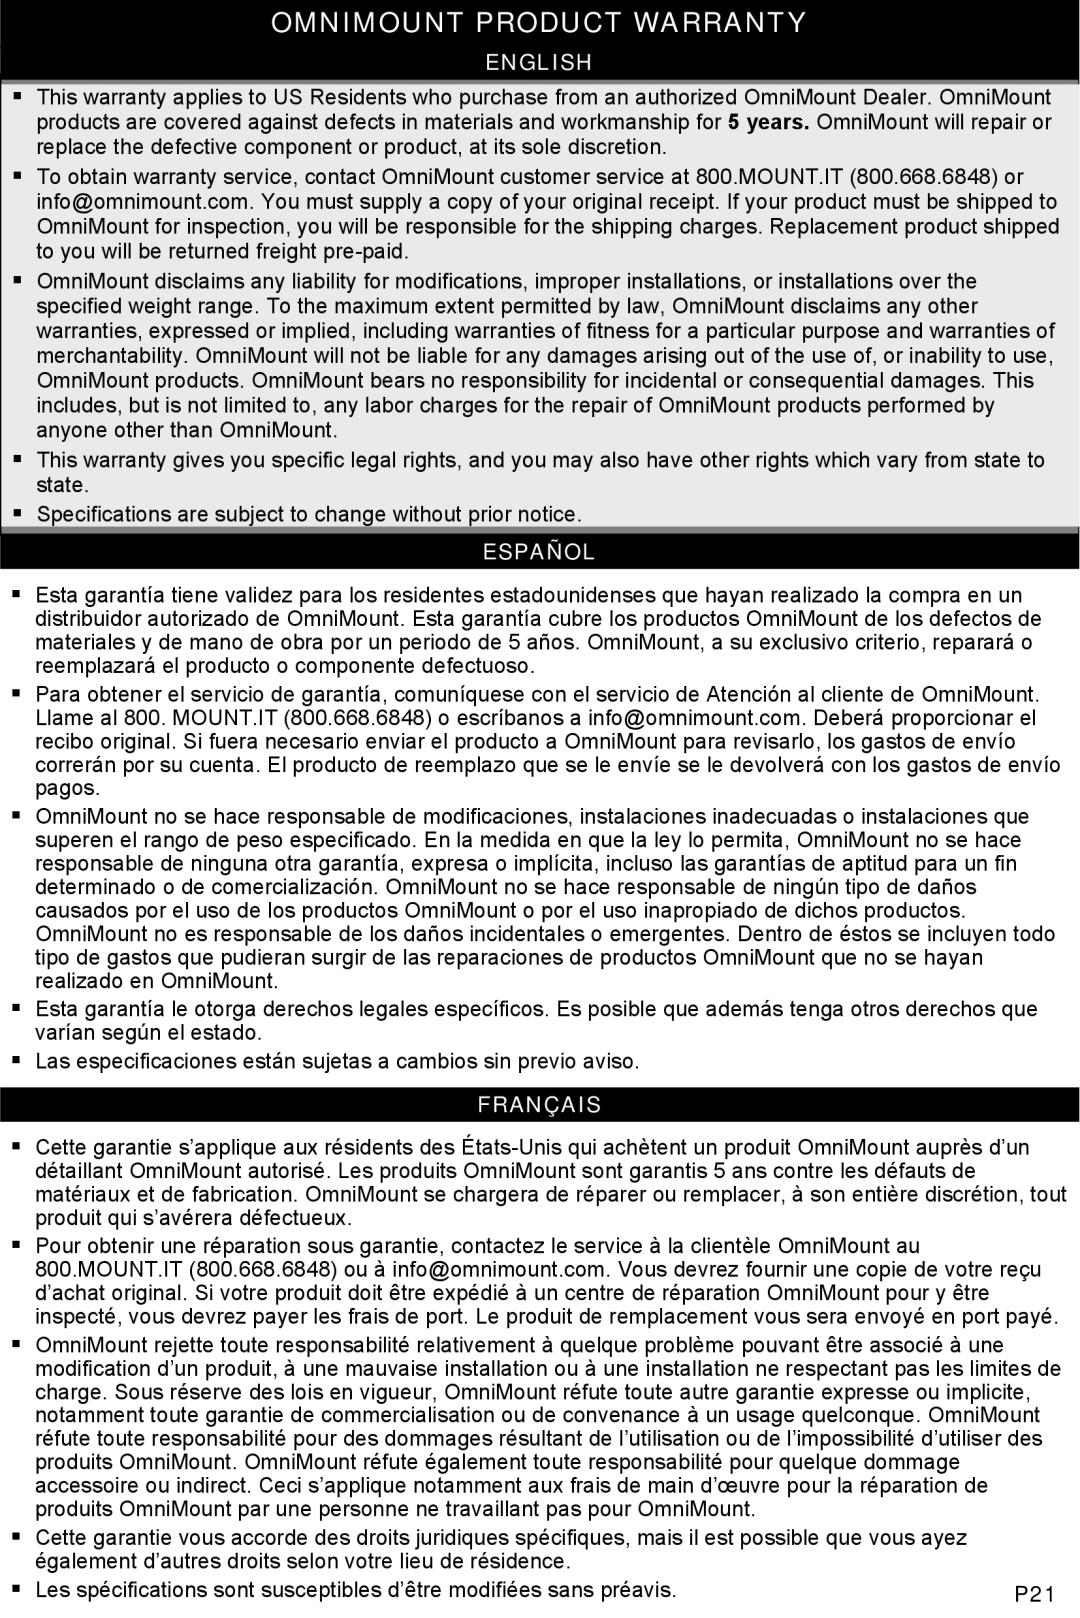 Omnimount MWF16 instruction manual Omnimount Product Warranty, English, Español, Français 